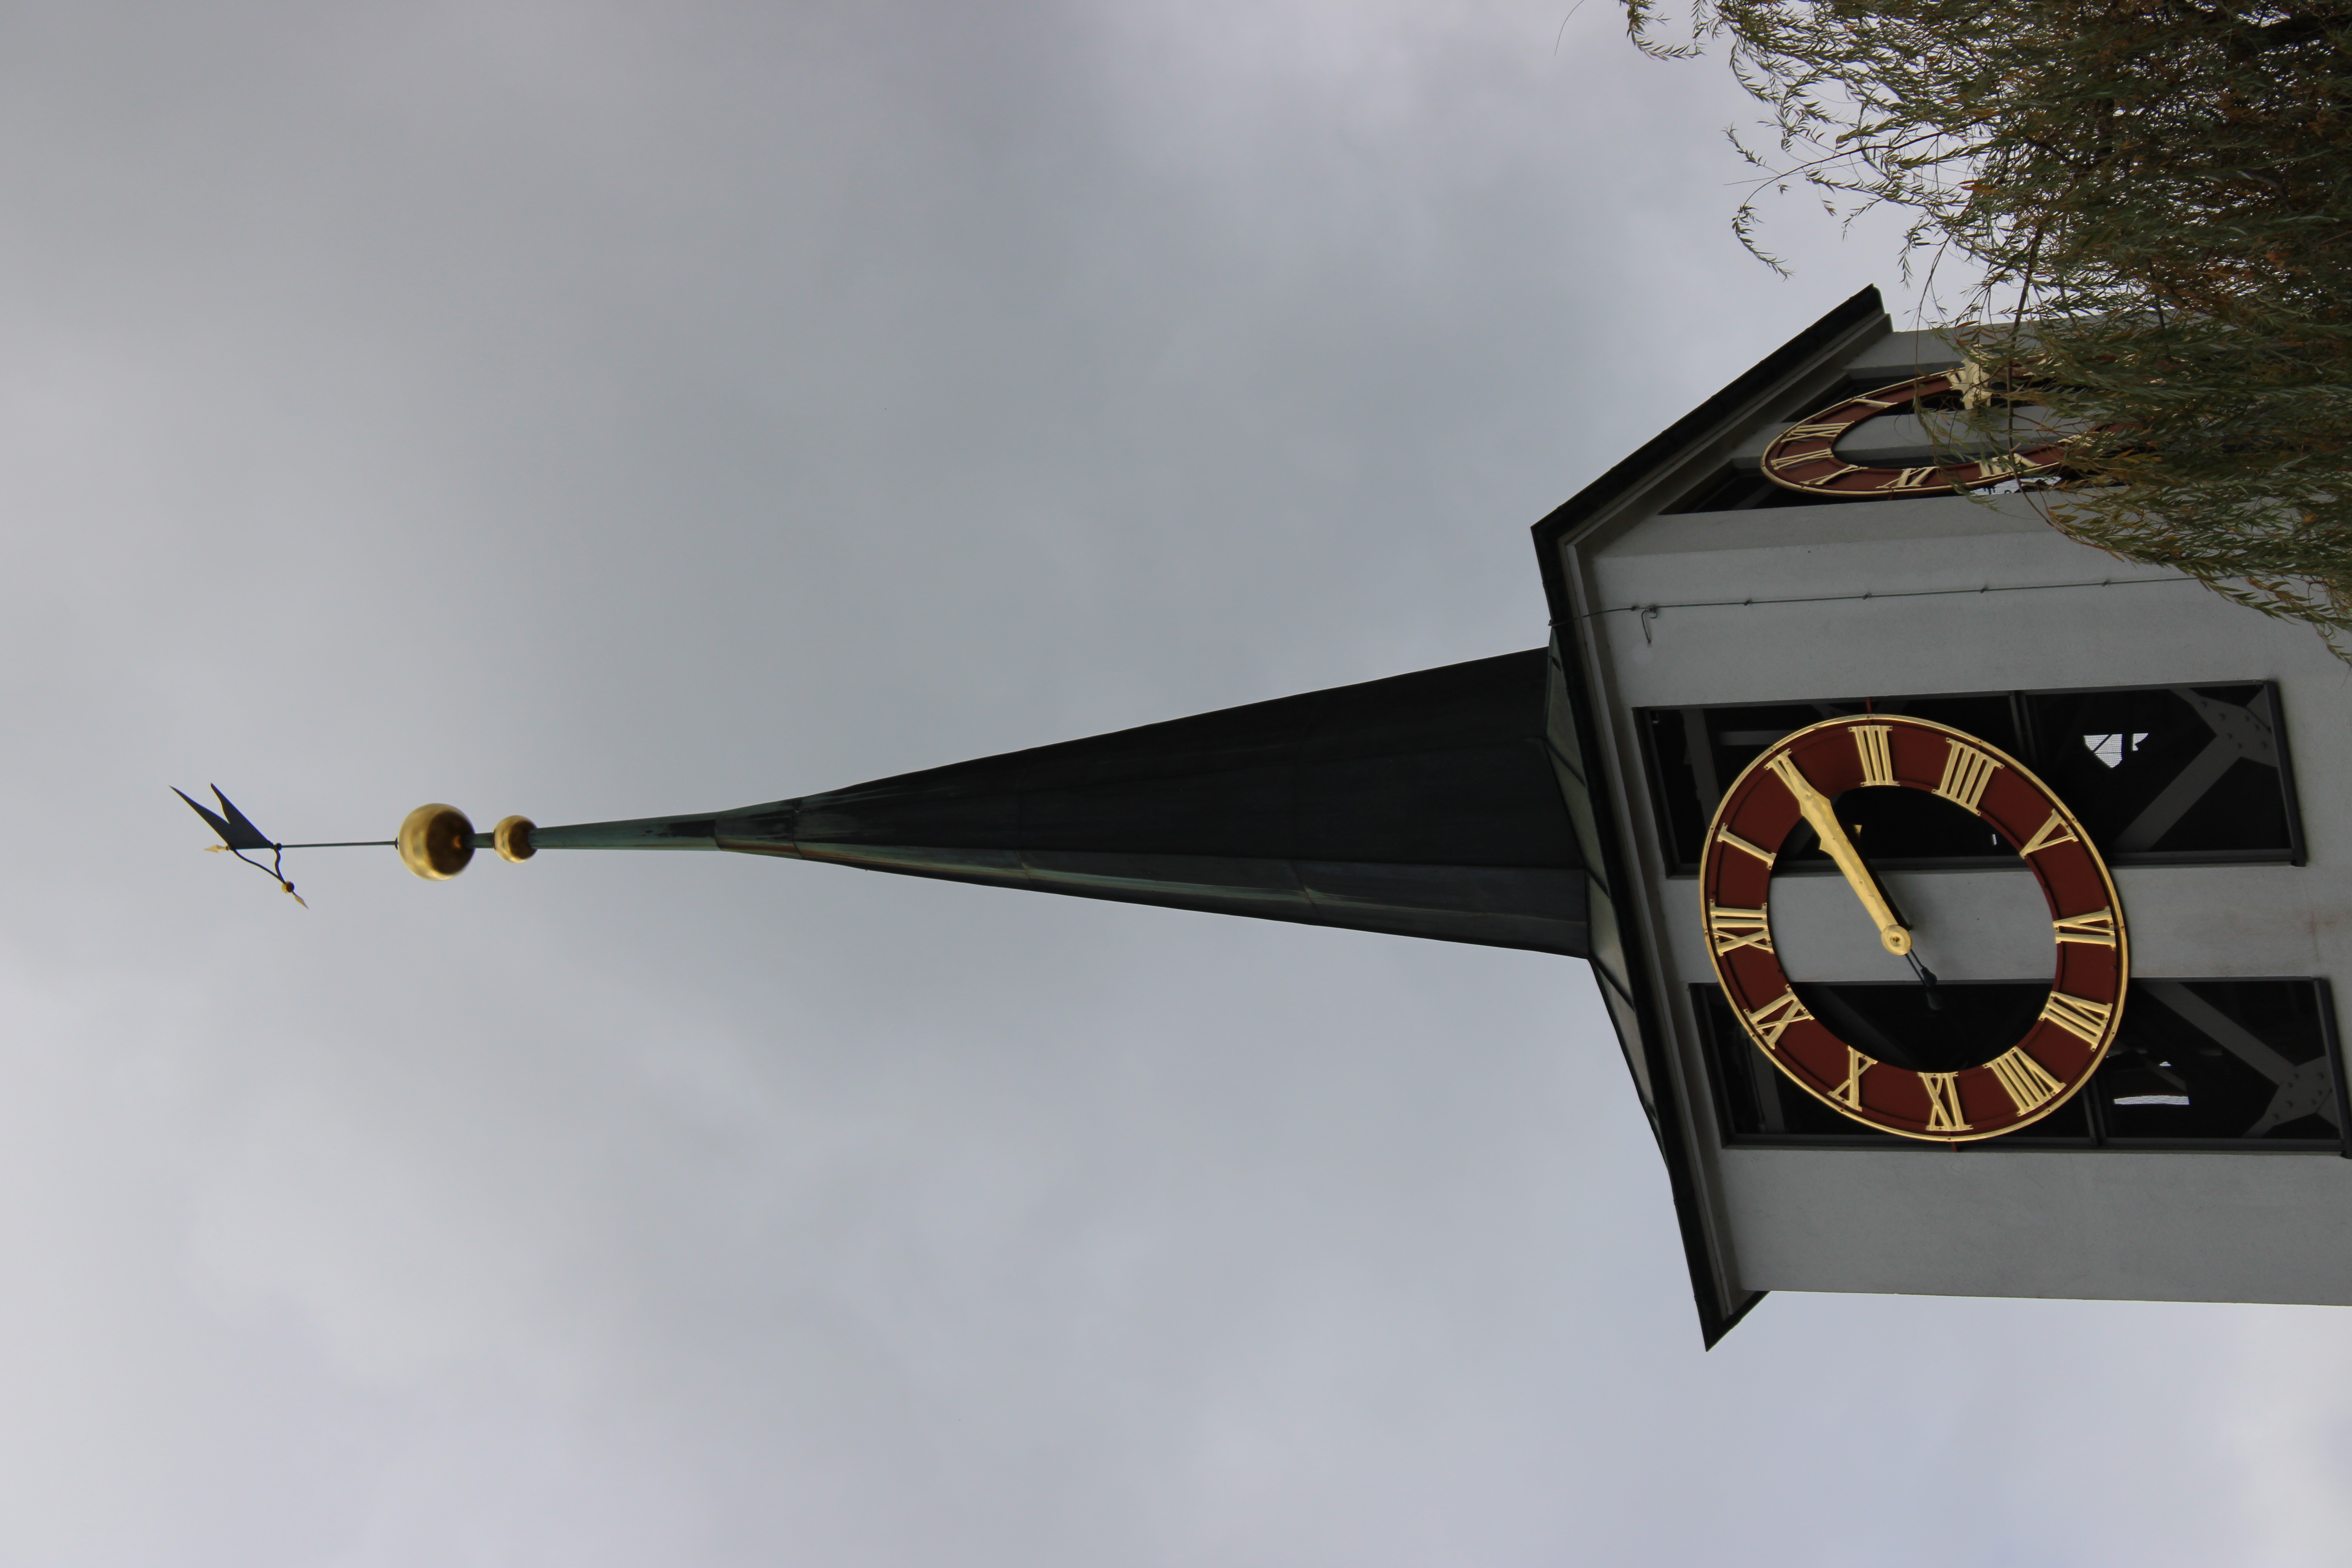 Fällanden church tower